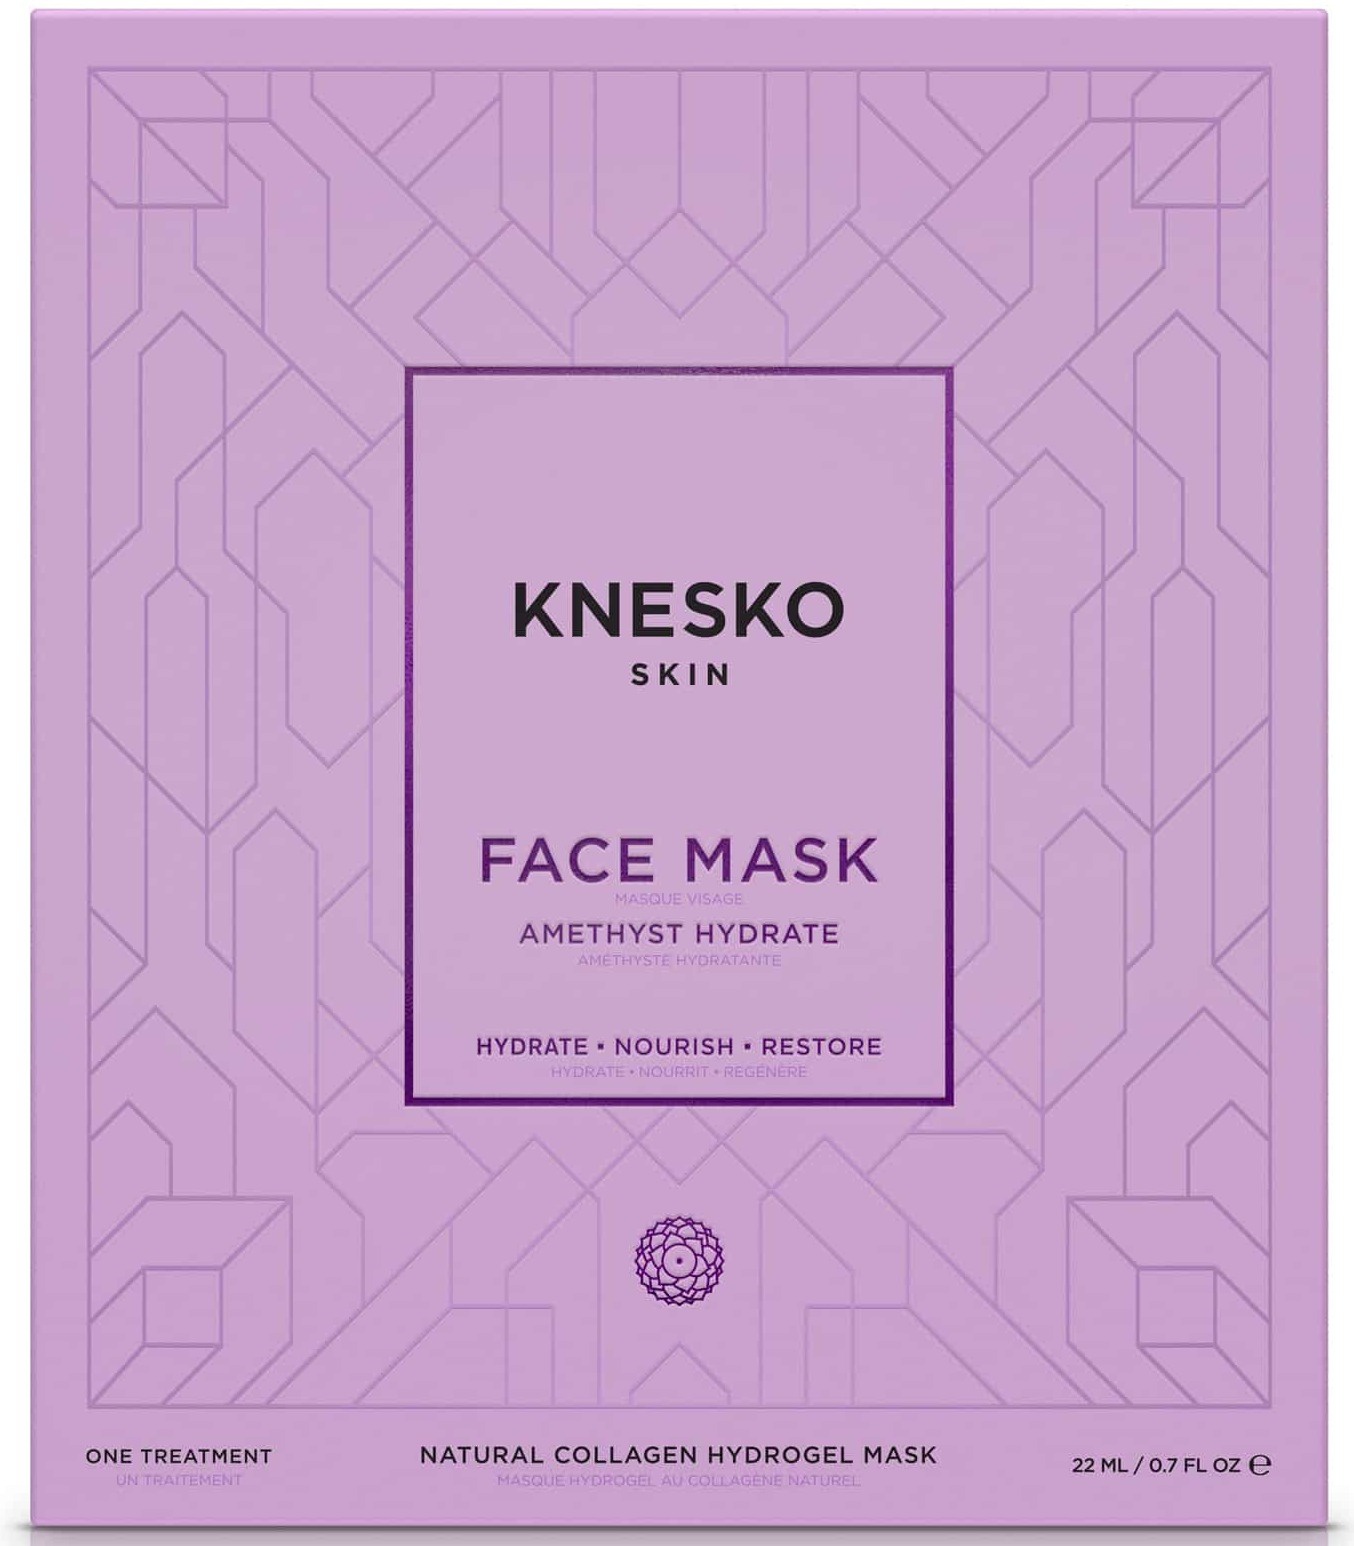 Knesko skin Amethyst Hydrate Face Mask